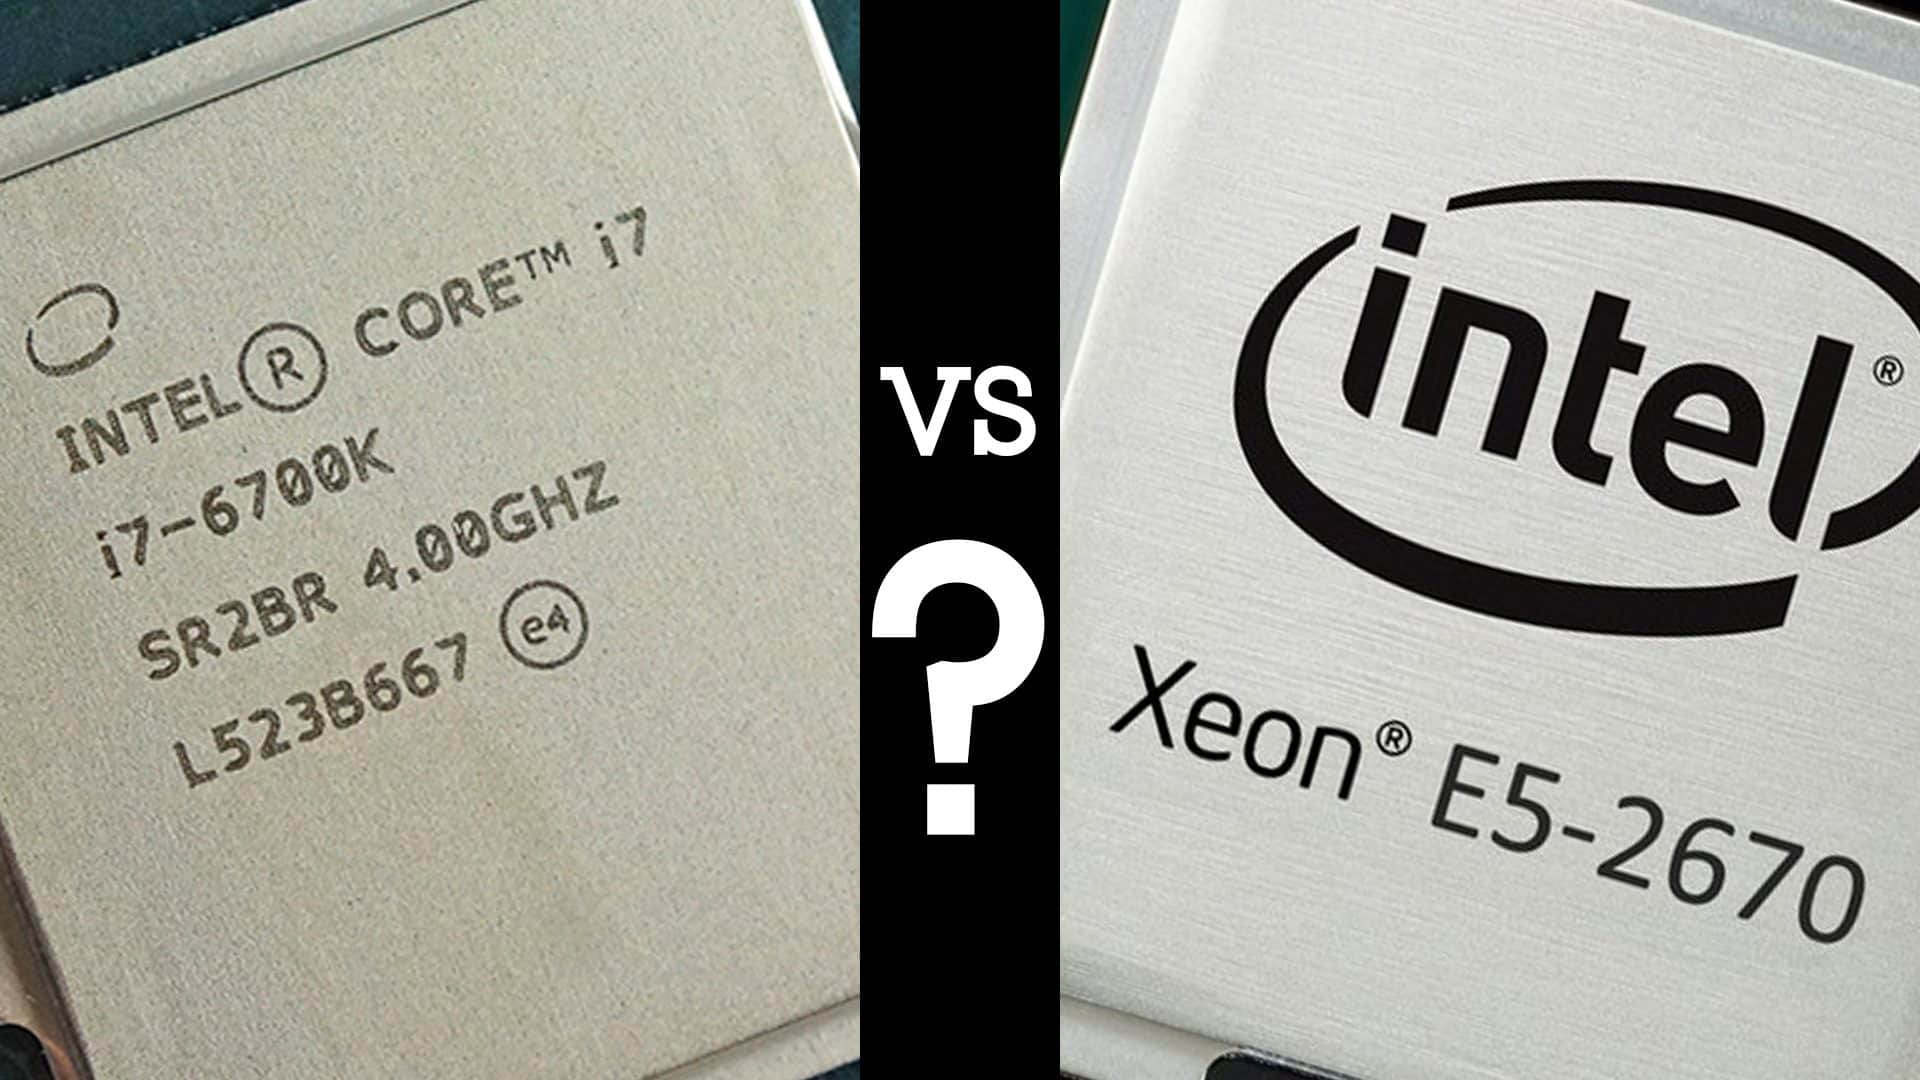 fonds bestrating rijm XEON vs Core i7 - The Geek Pub